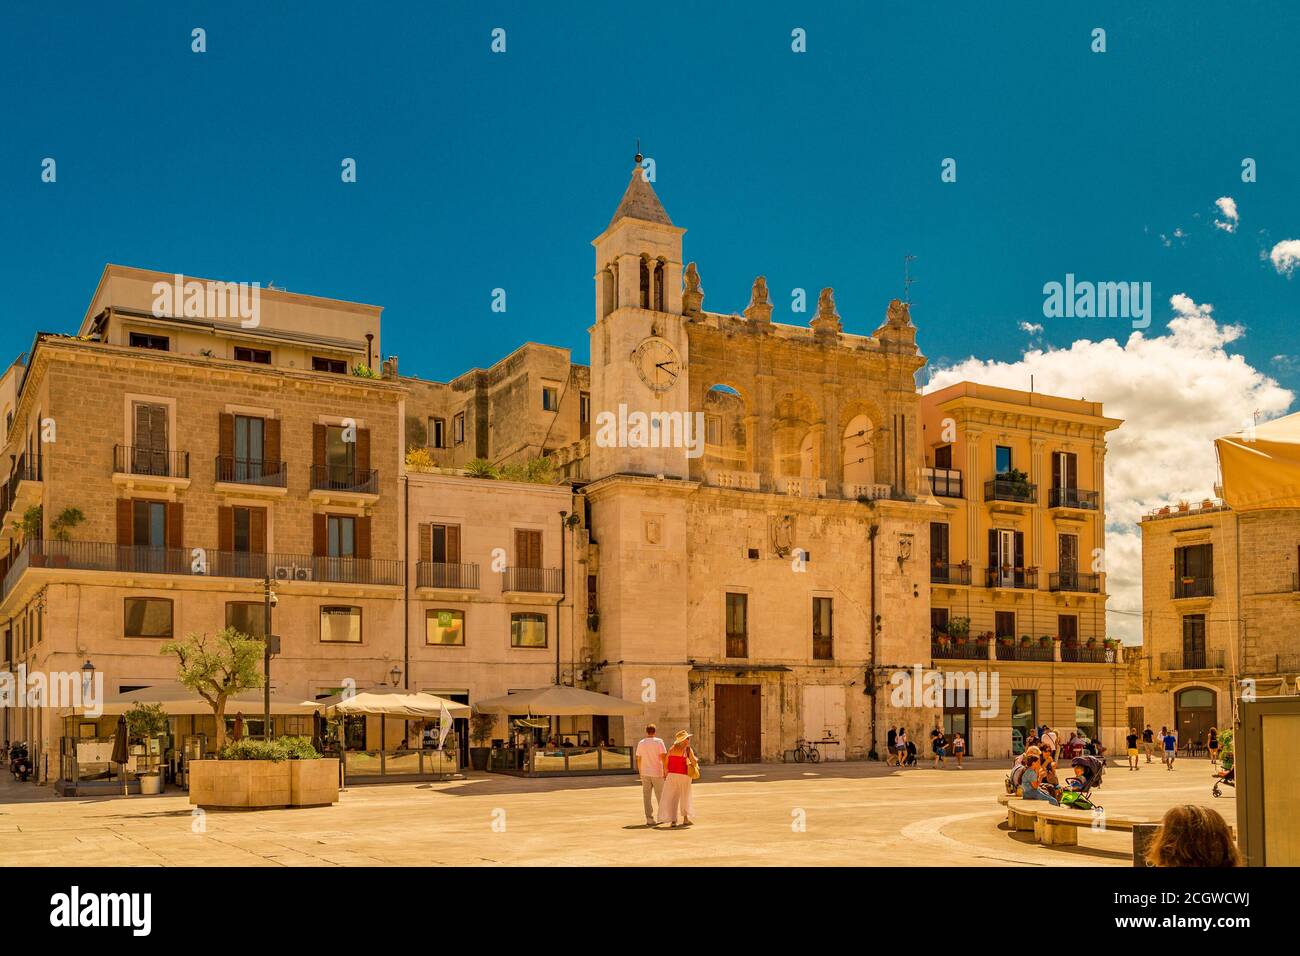 BARI, ITALY - SEPTEMBER 1, 2020: tourists walking in the square of Bari Vecchia Stock Photo